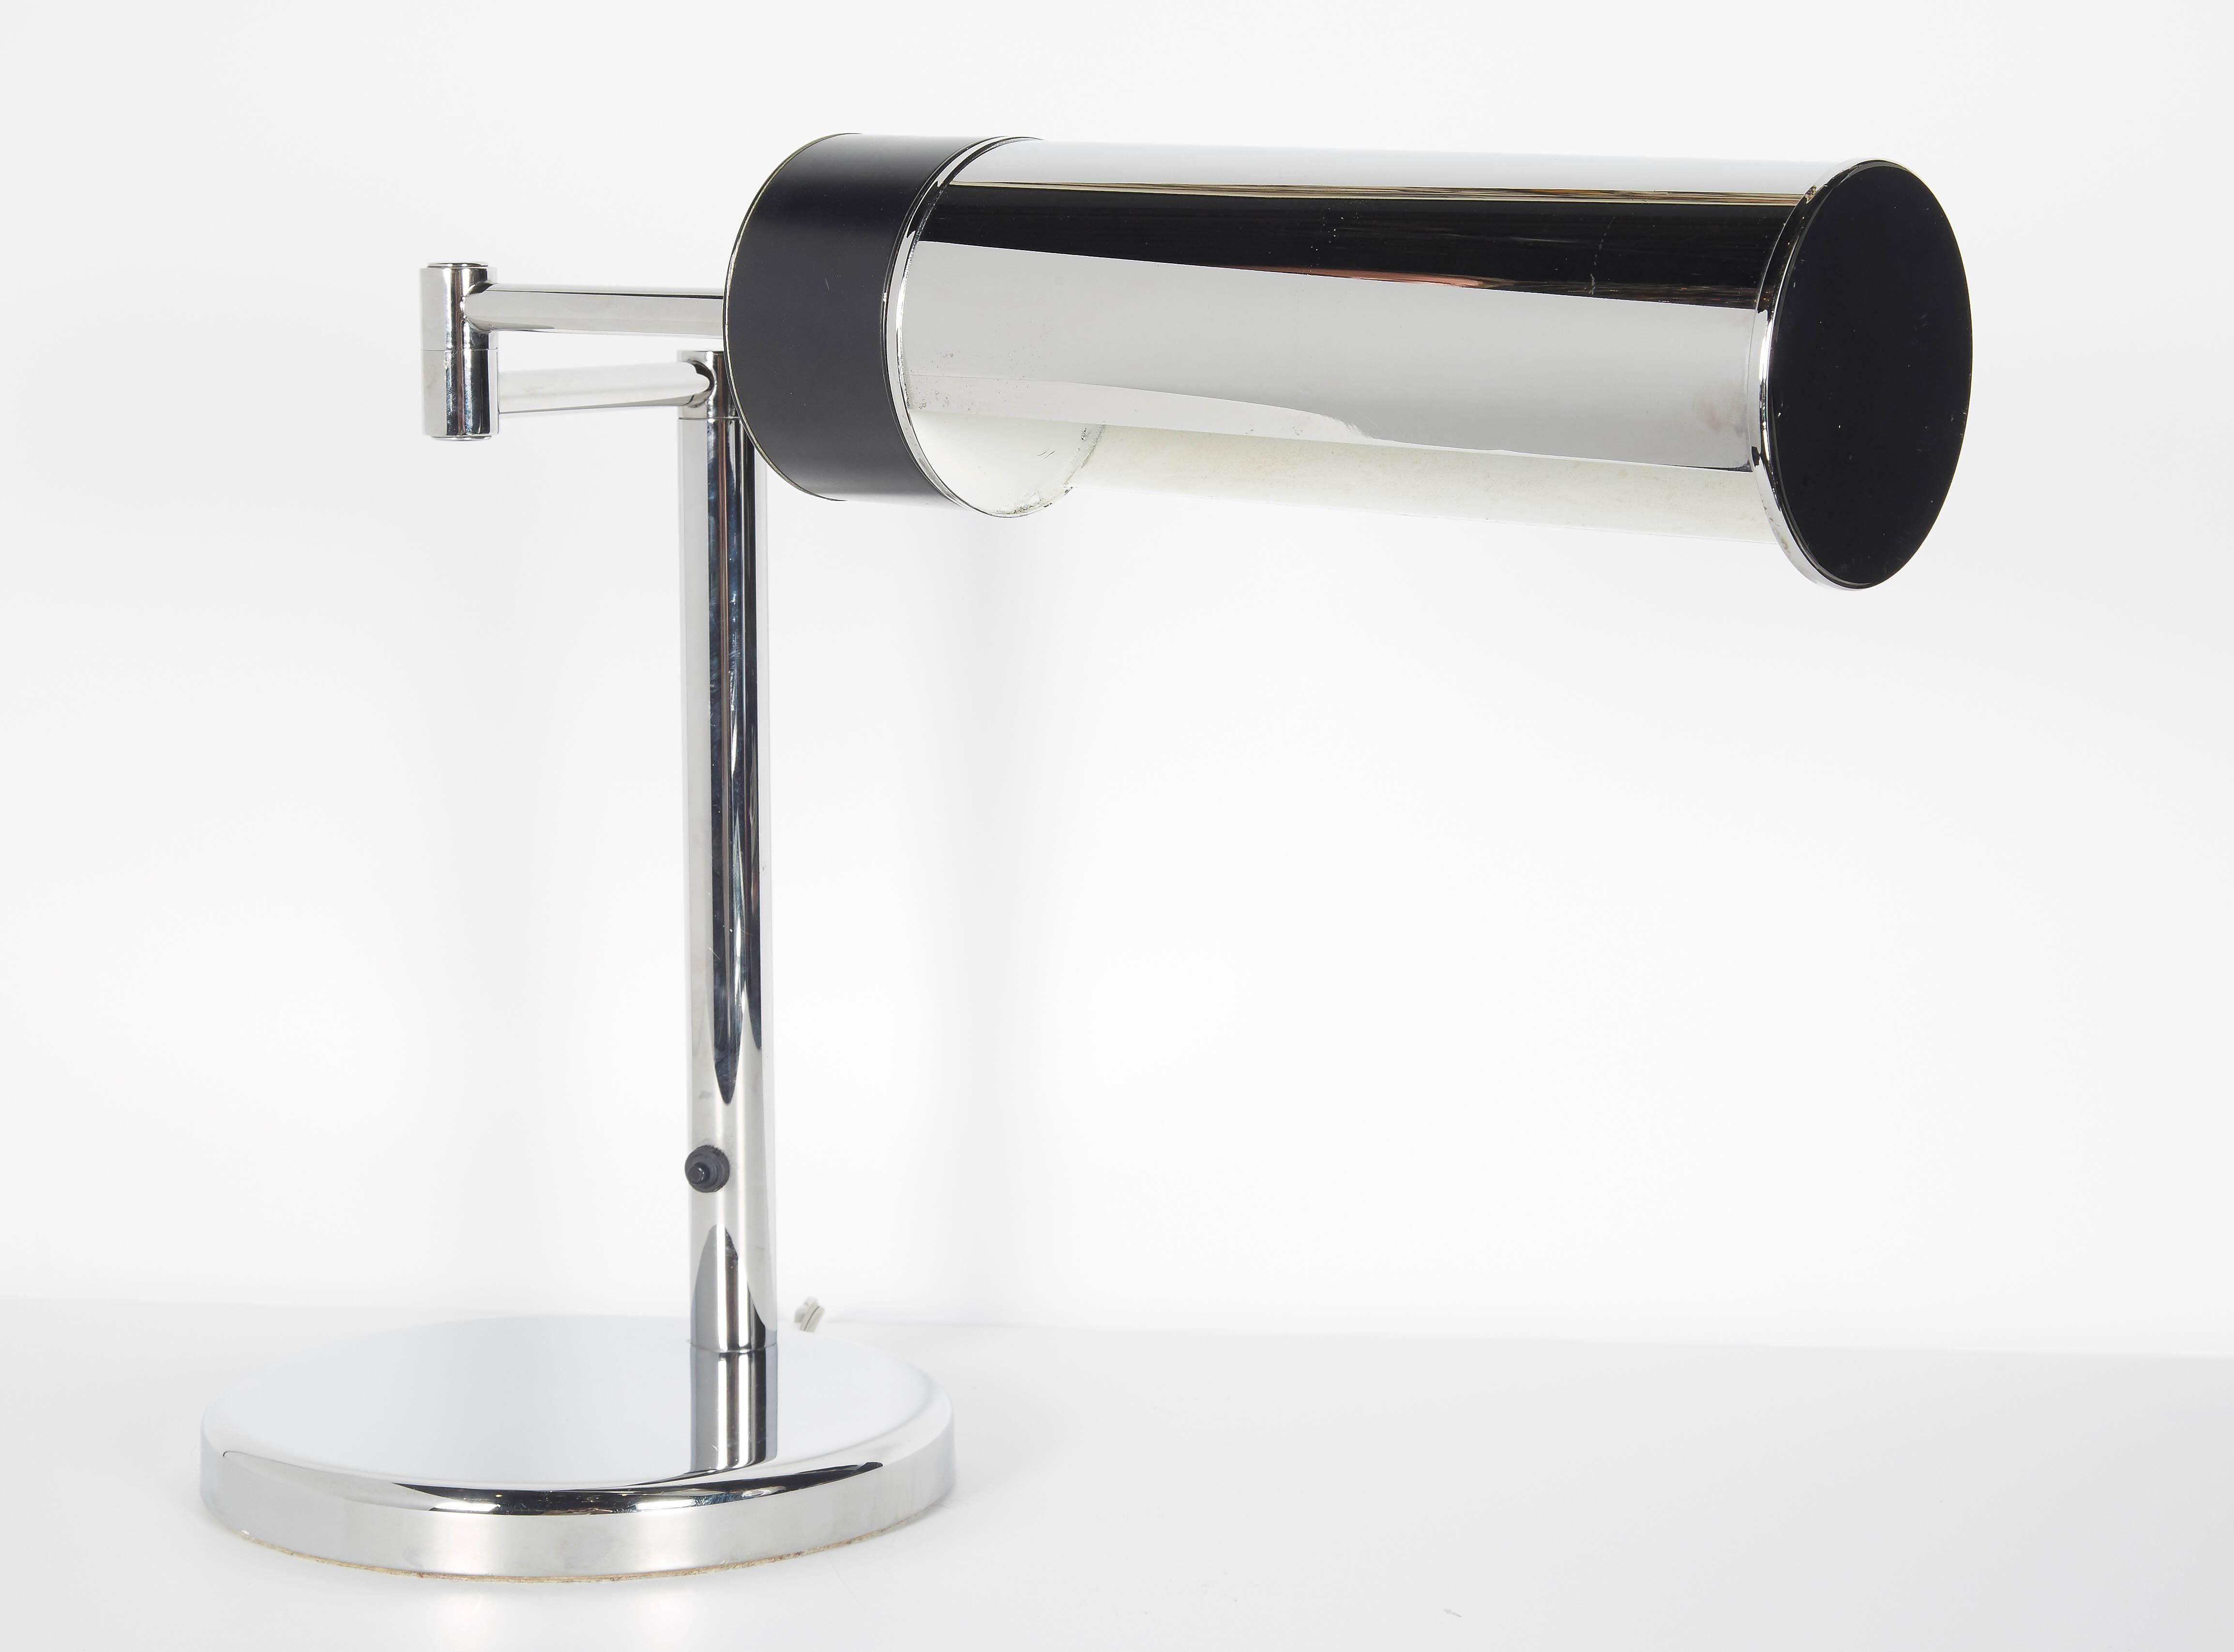 American Mid-Century Modern Chrome Desk Lamp with Swing Arm by Walter Von Nessen, 1960s